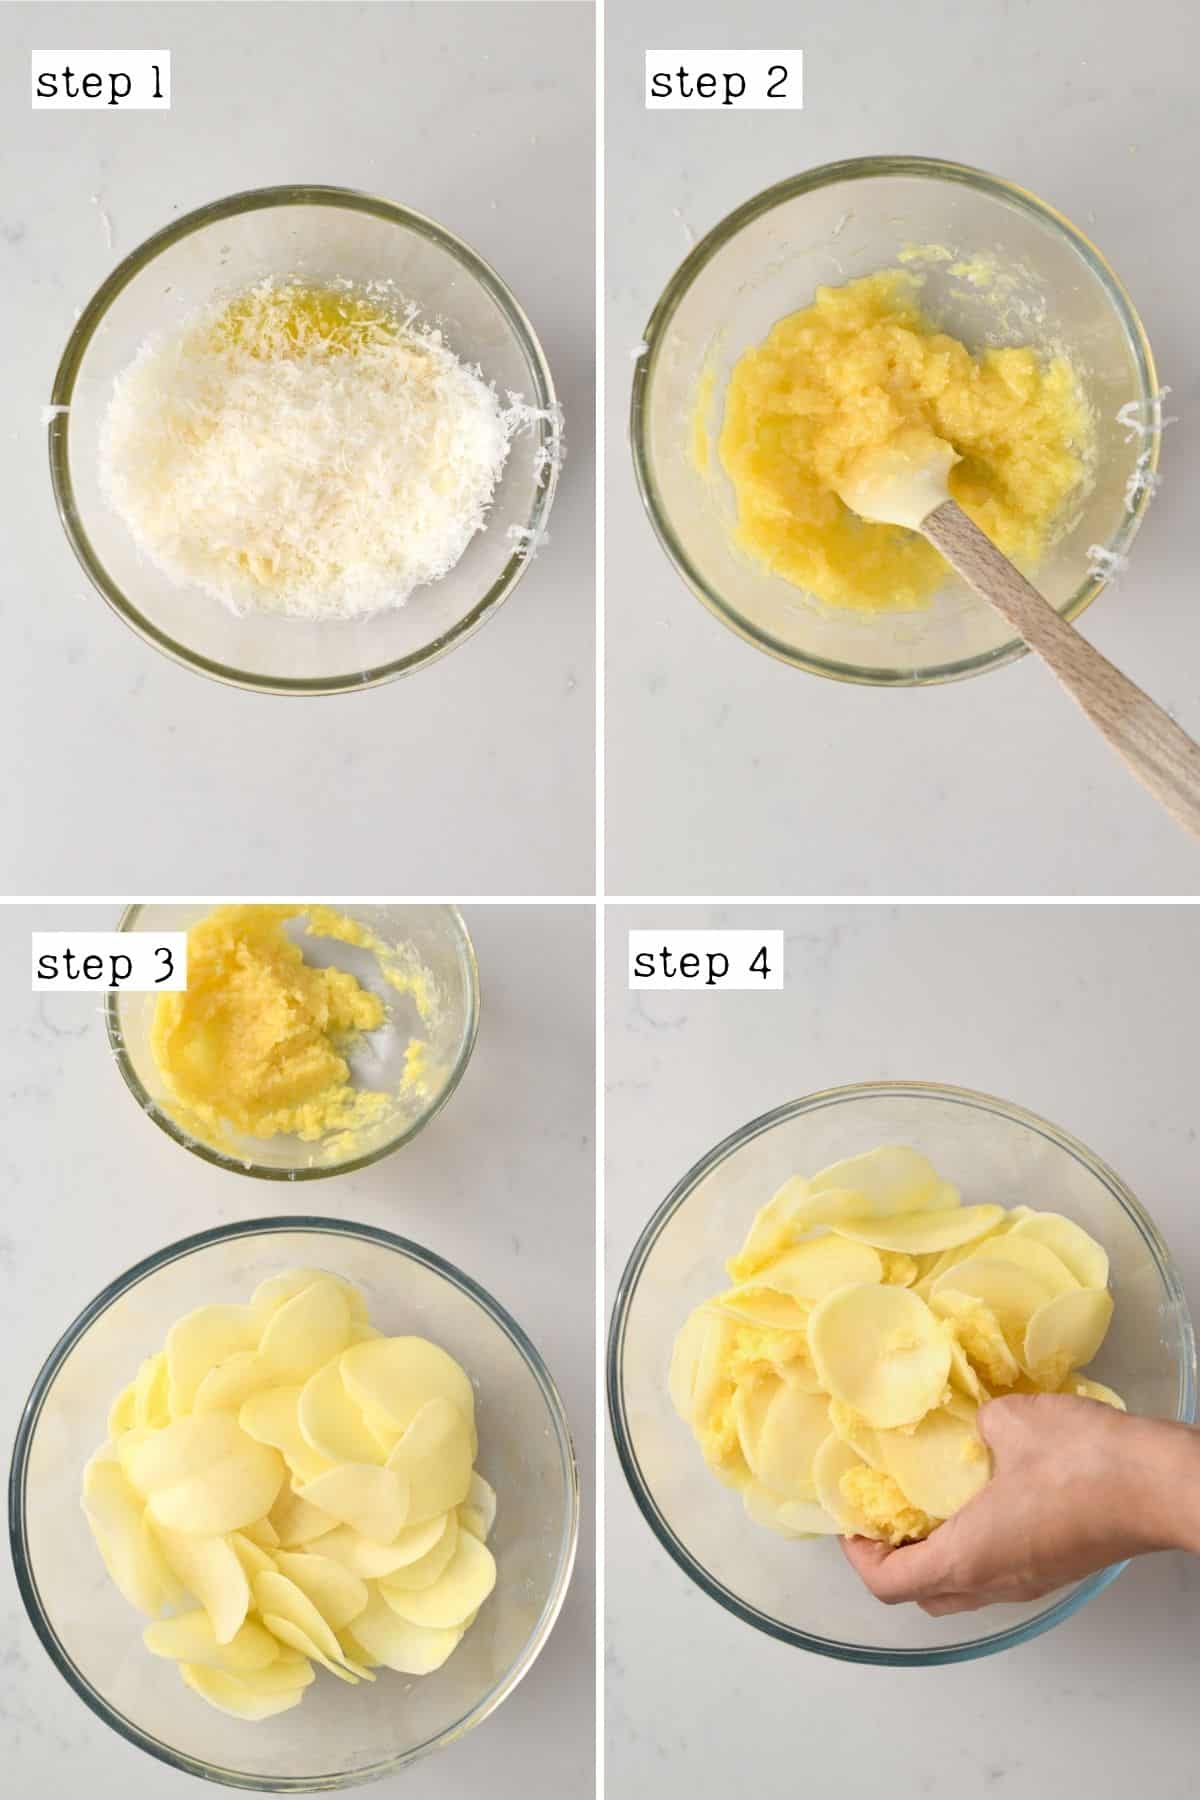 Steps for preparing crispy potato stacks